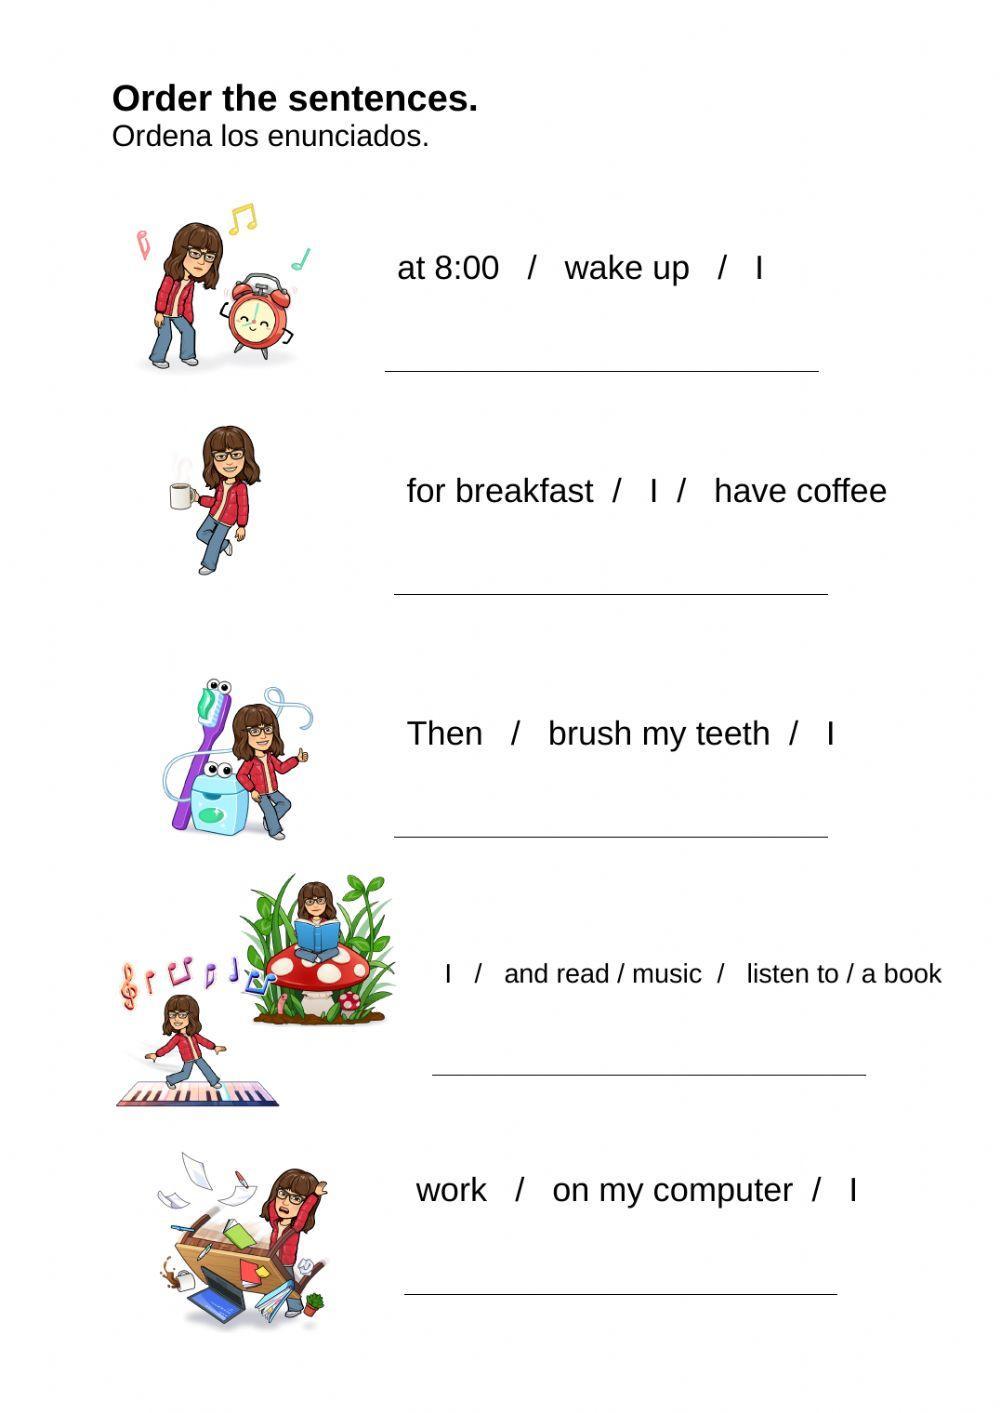 My routine: order the sentences